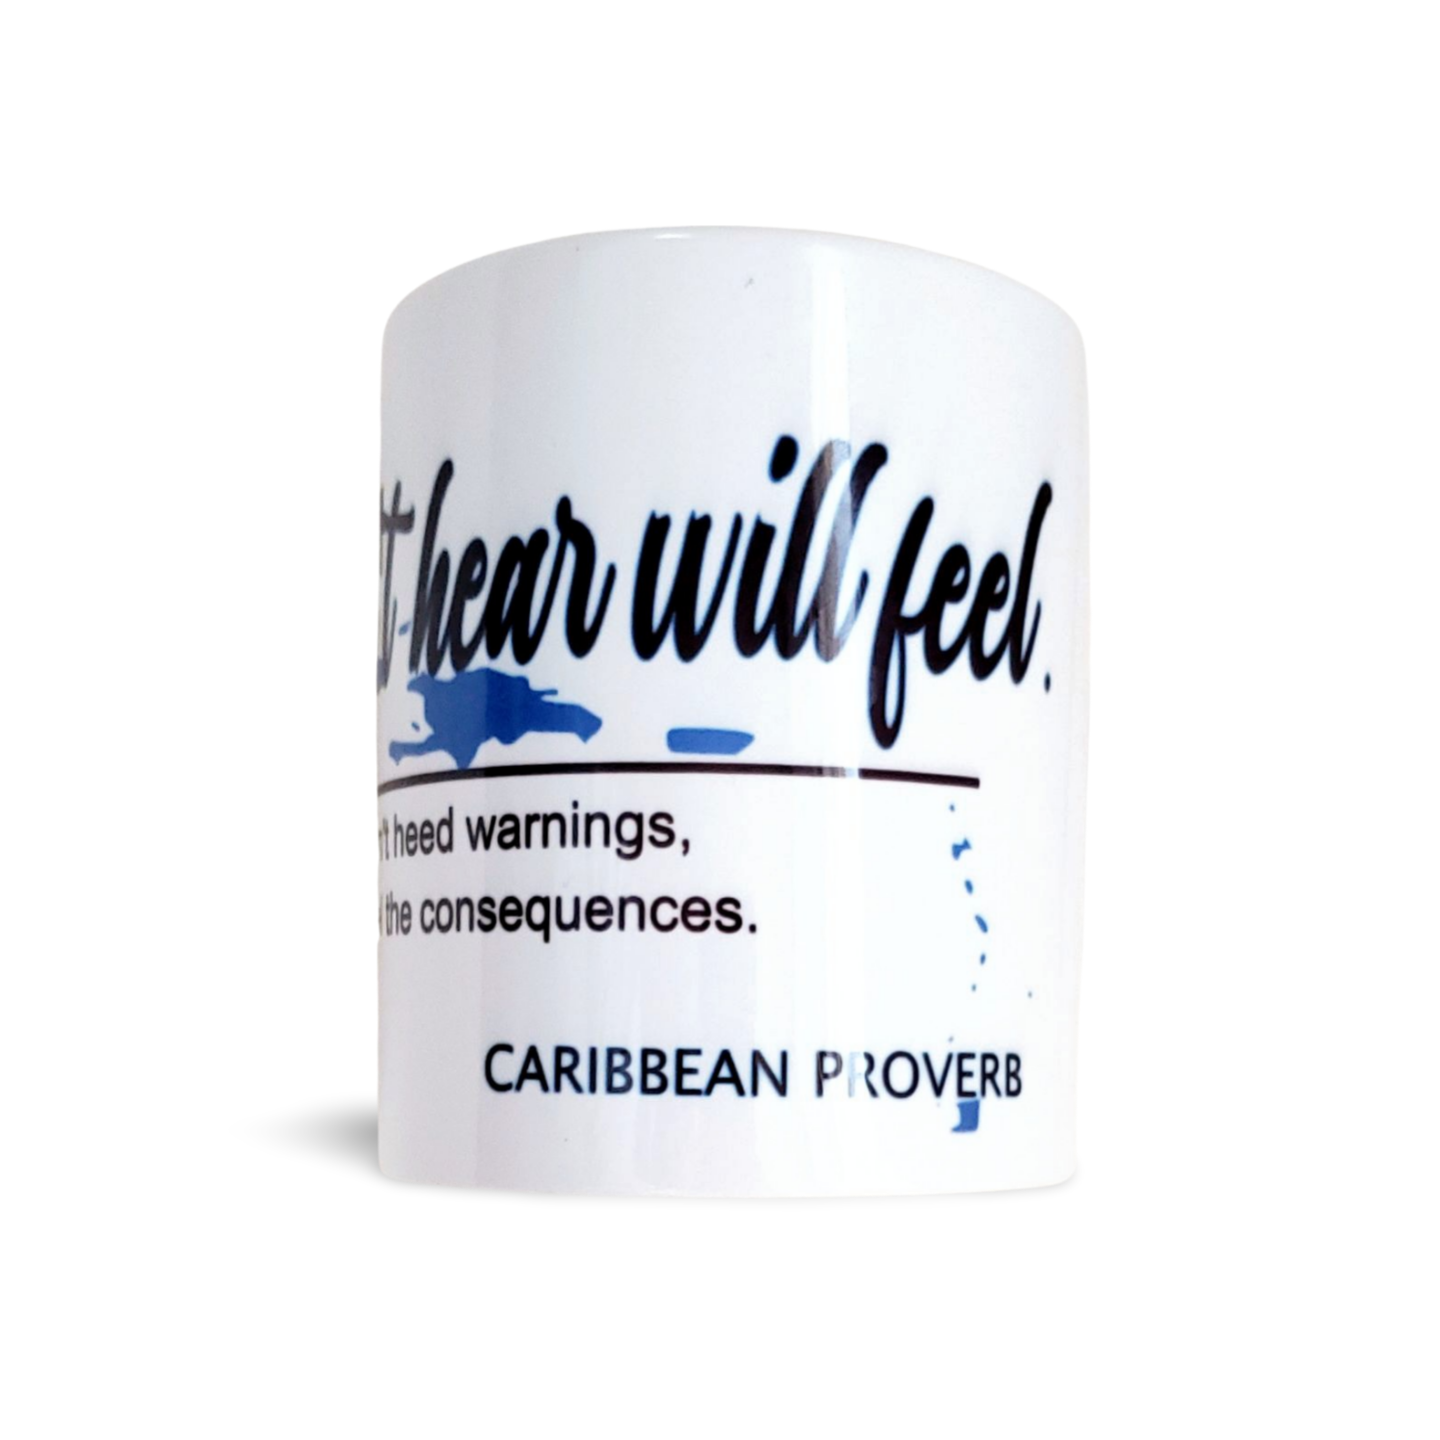 (Caribbean Proverb) Who don't hear will feel mug